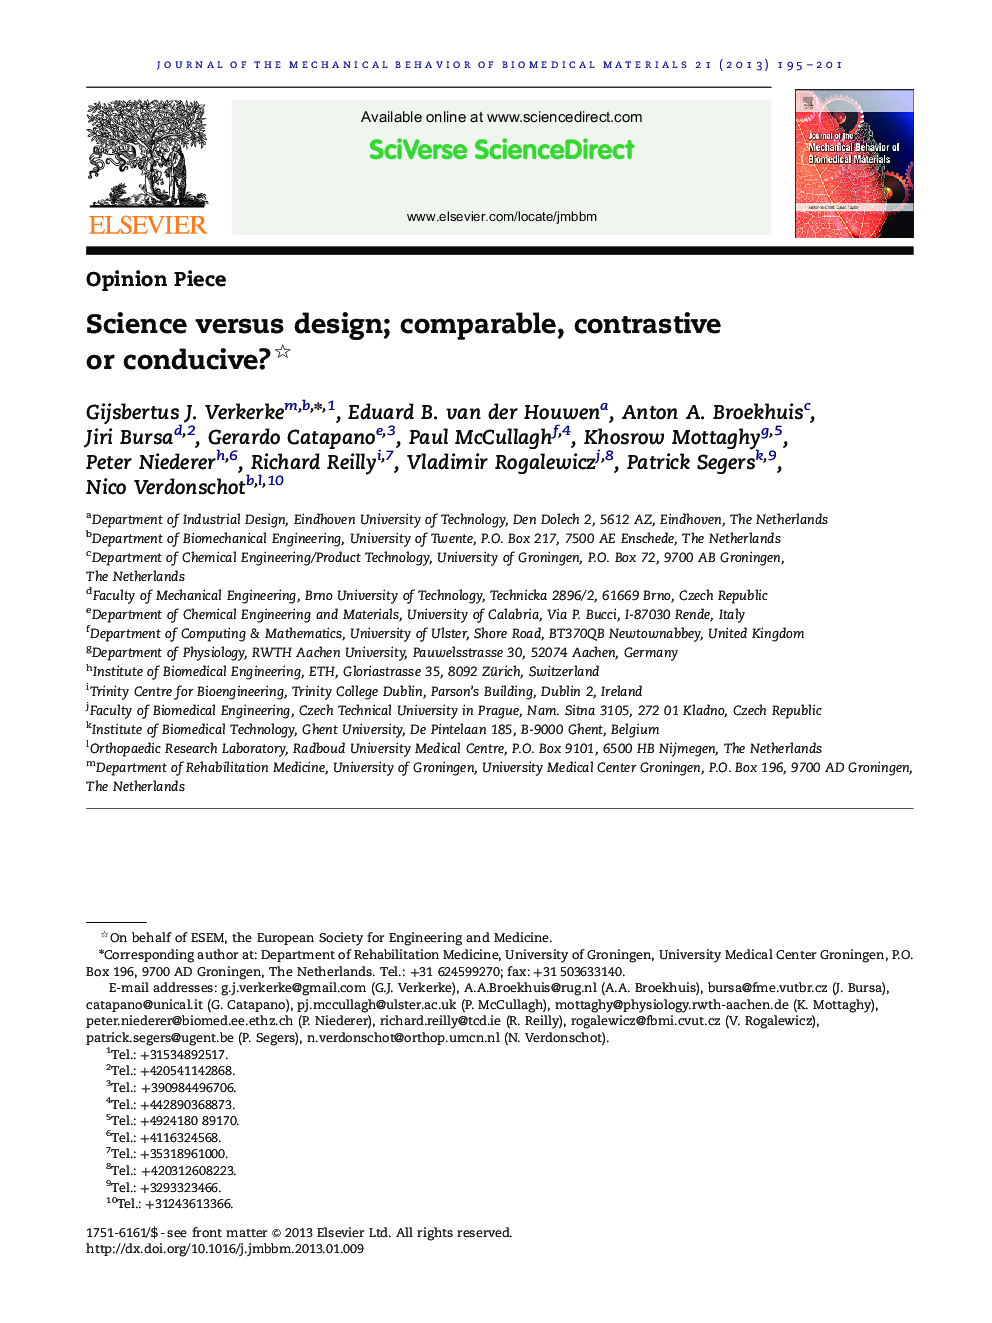 Science versus design; comparable, contrastive or conducive? 